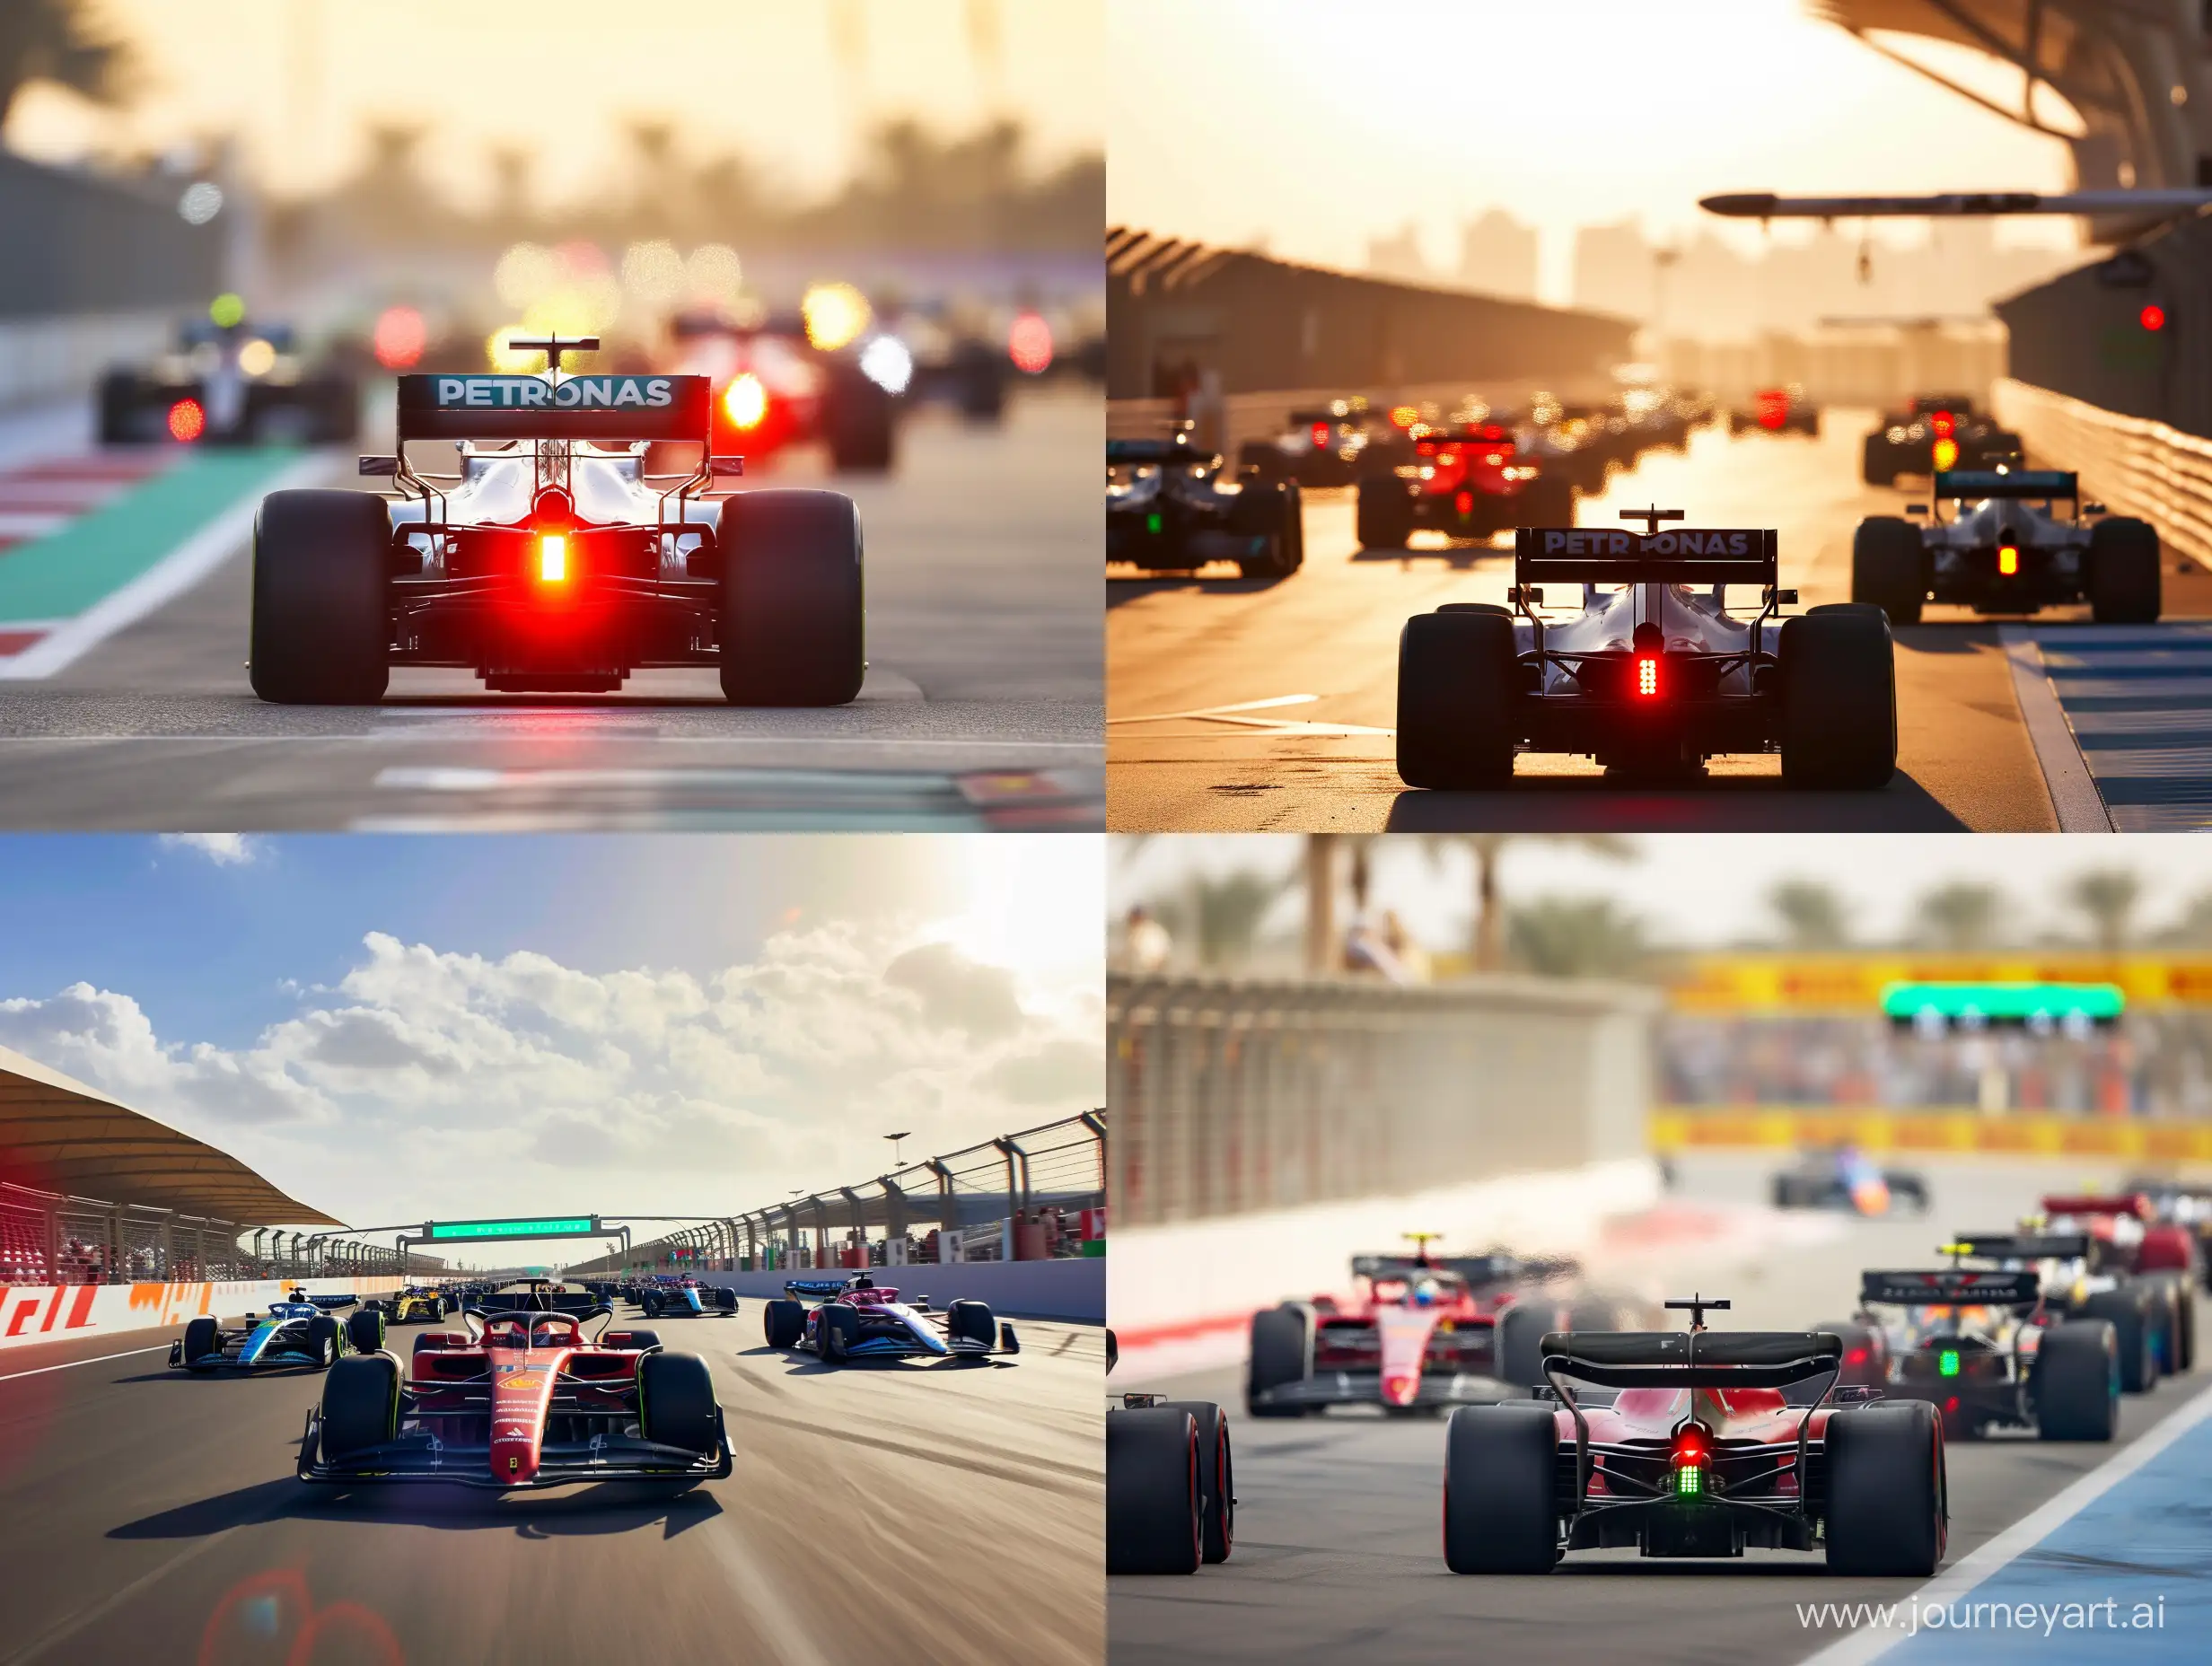 Sunny-Day-F1-Racing-at-Yas-Marina-Circuit-Cars-Ready-at-the-Starting-Line